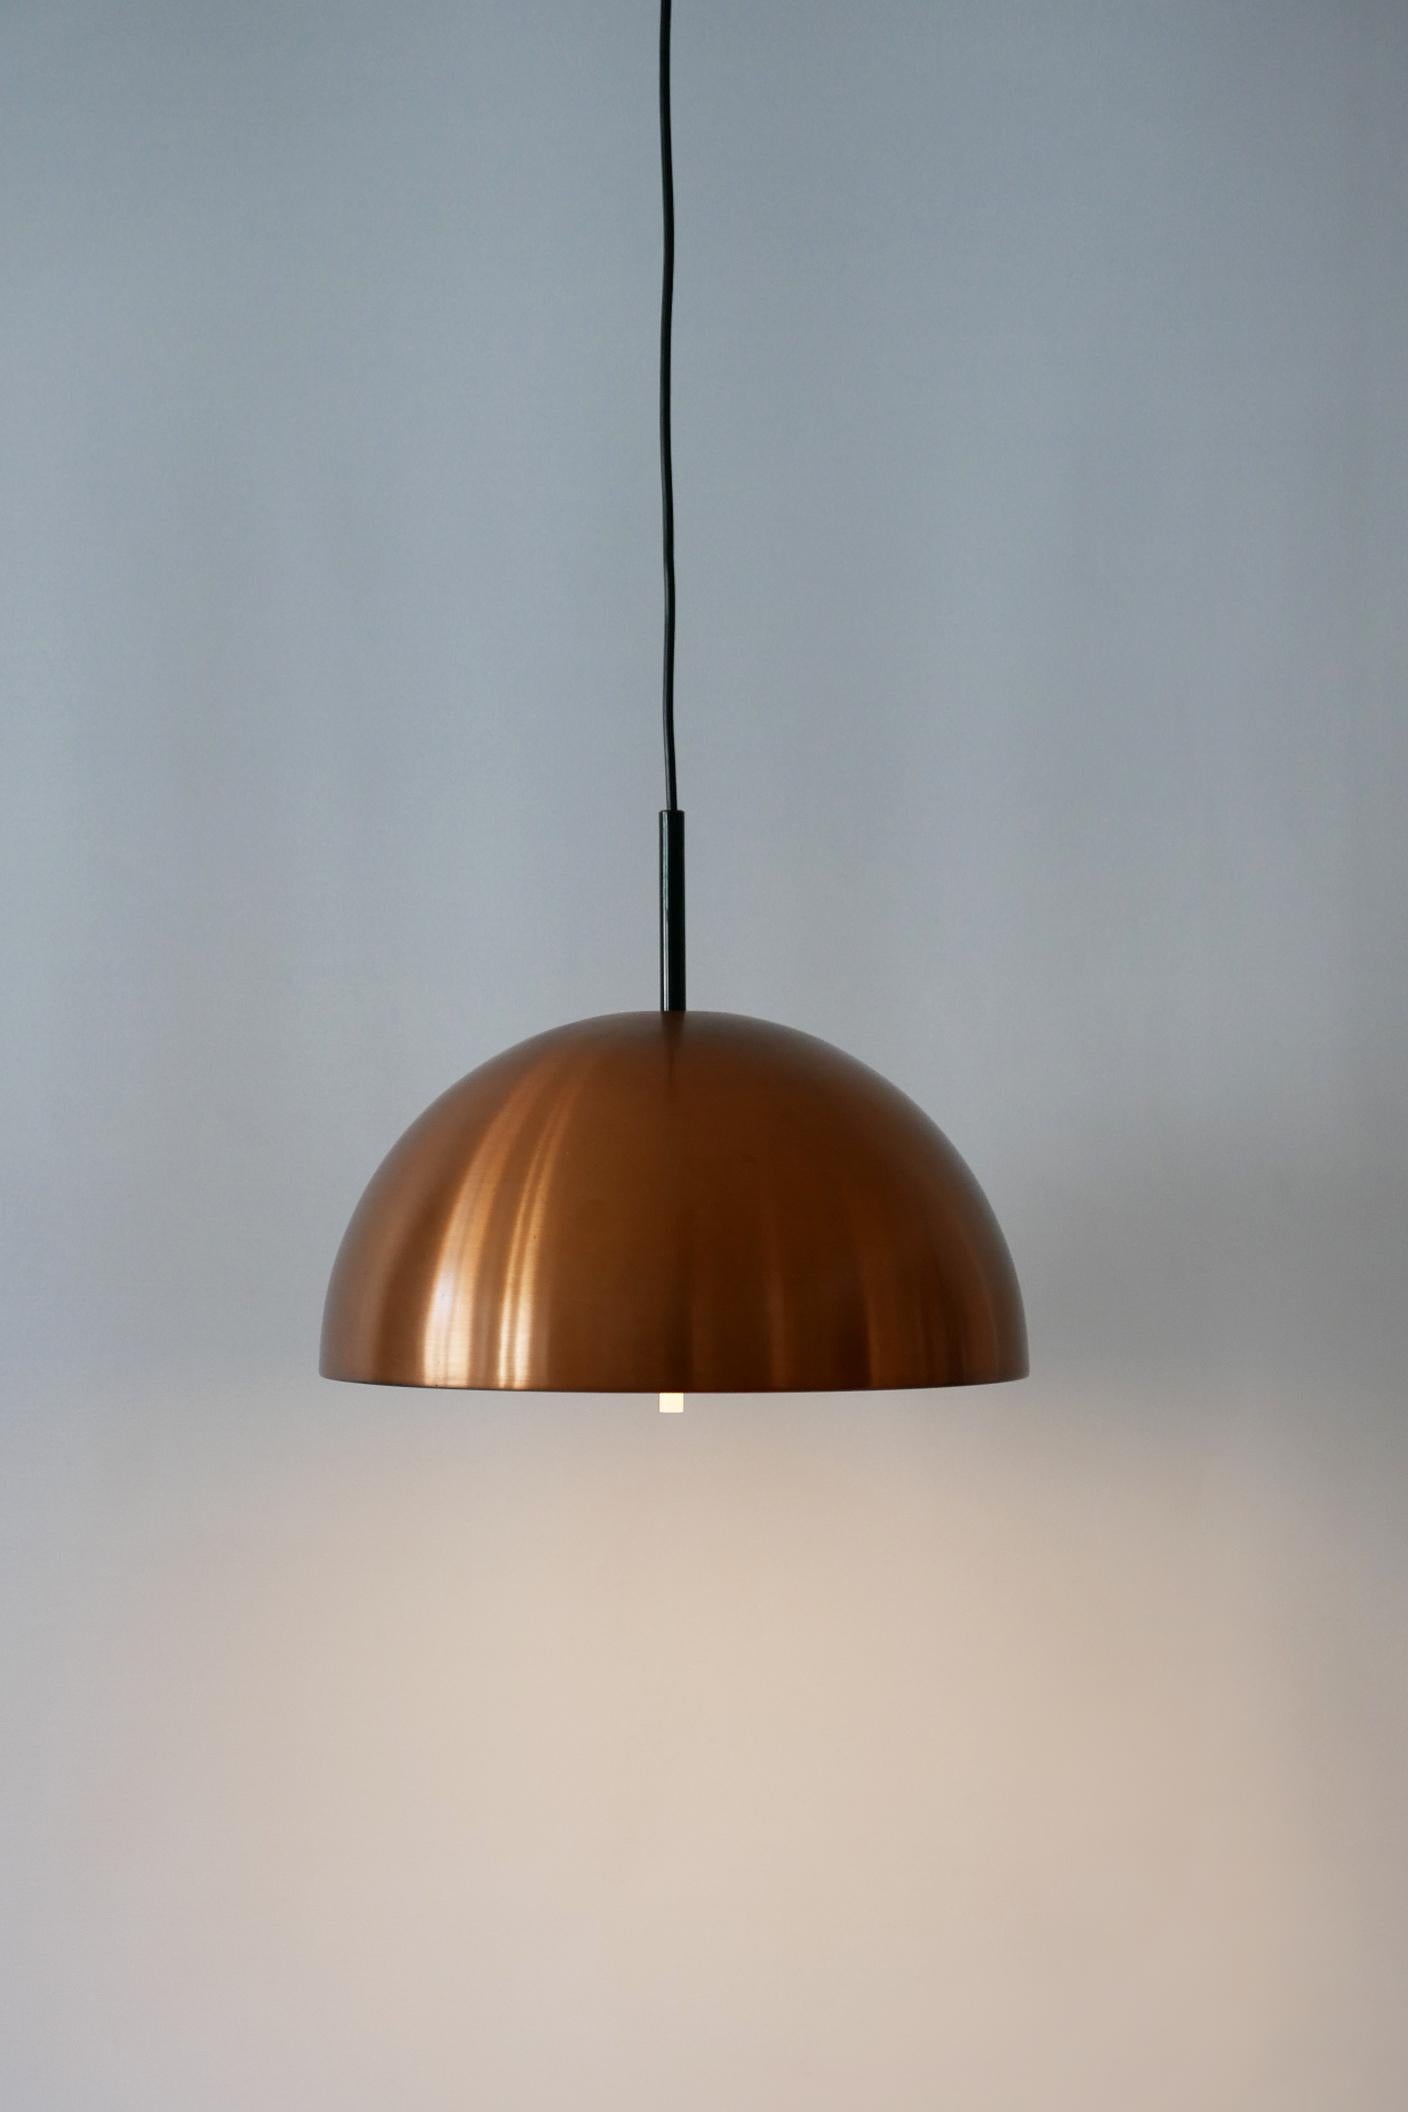 Elegant Mid-Century Modern Copper Pendant Lamp by Staff & Schwarz 1960s, Germany For Sale 1